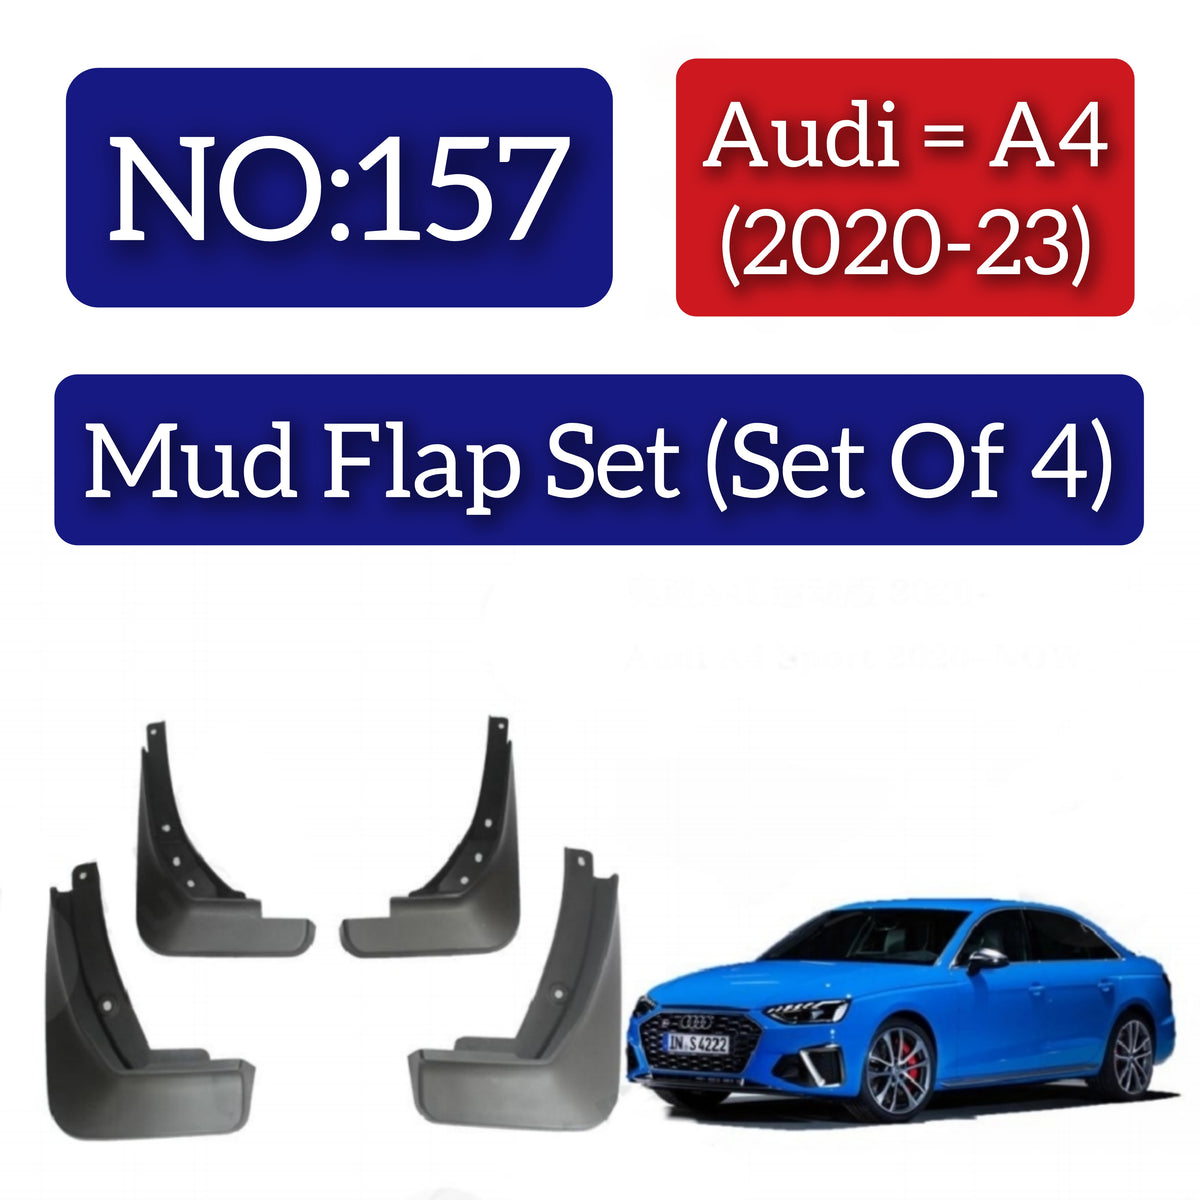 Audi A4 (2020-23) Mud Flap Set (Set of 4) Tag 157